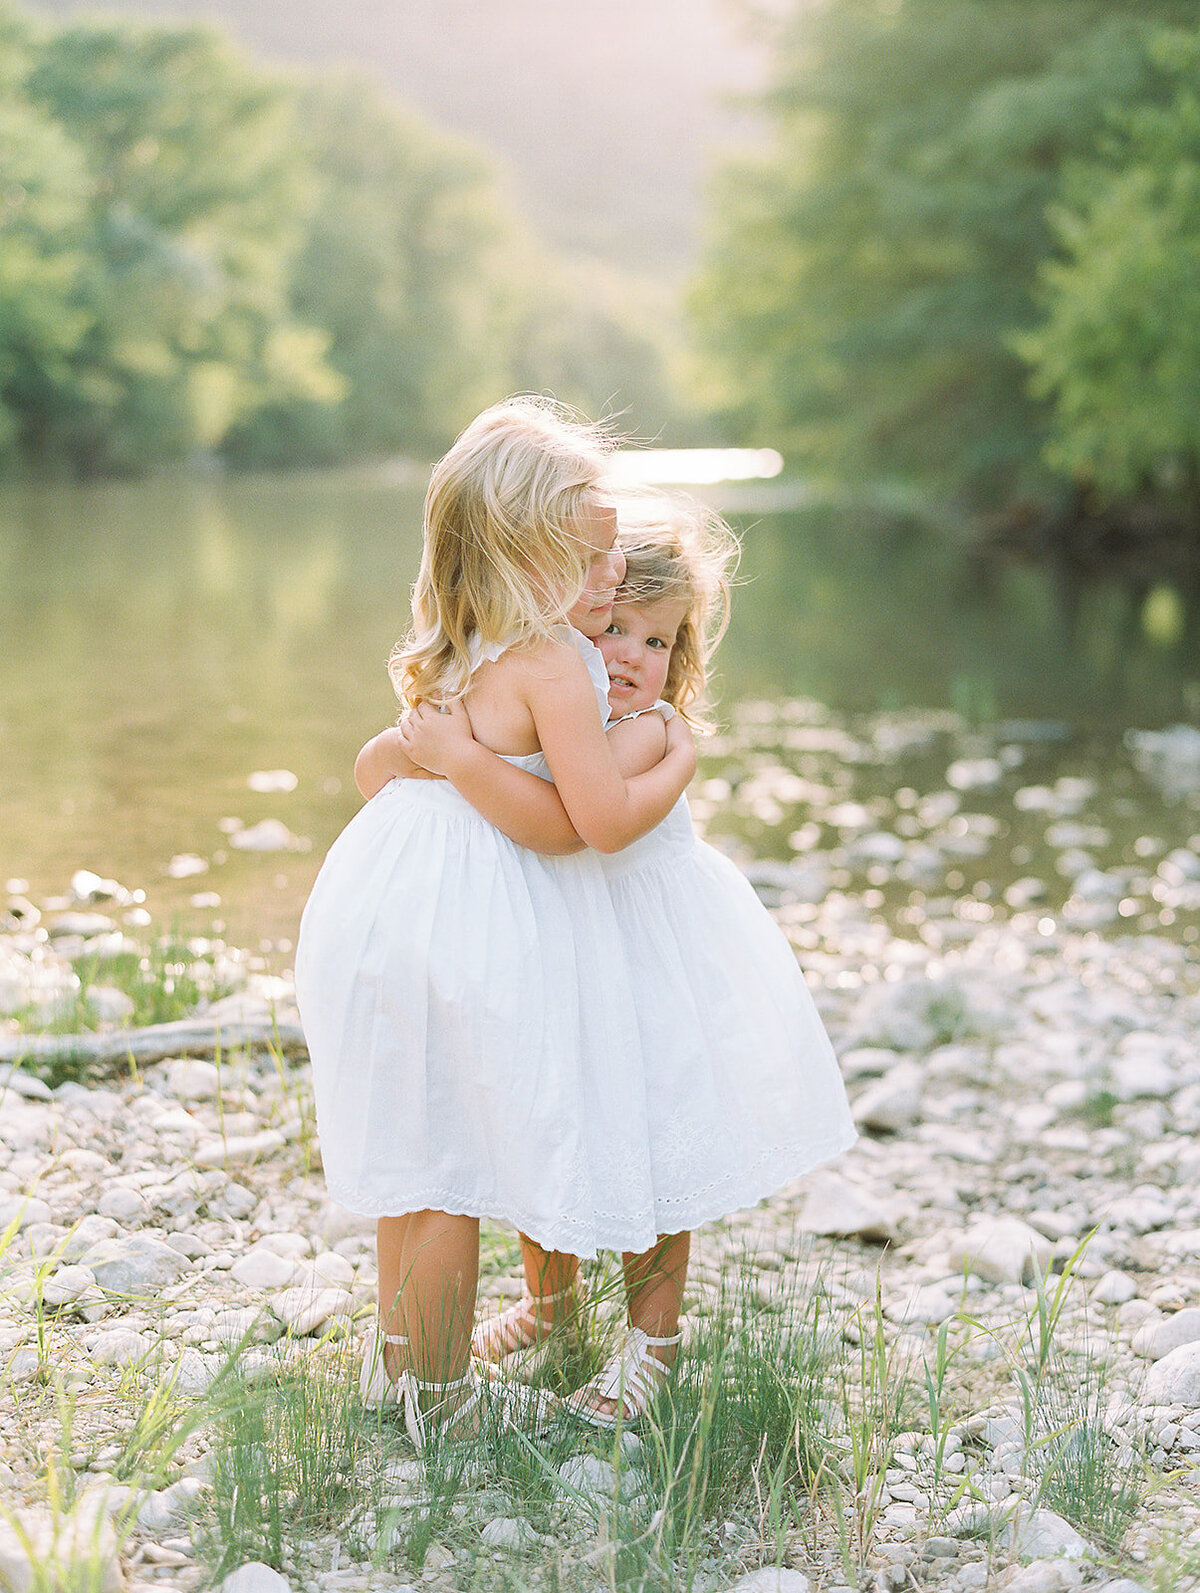 Two little girls in white dresses